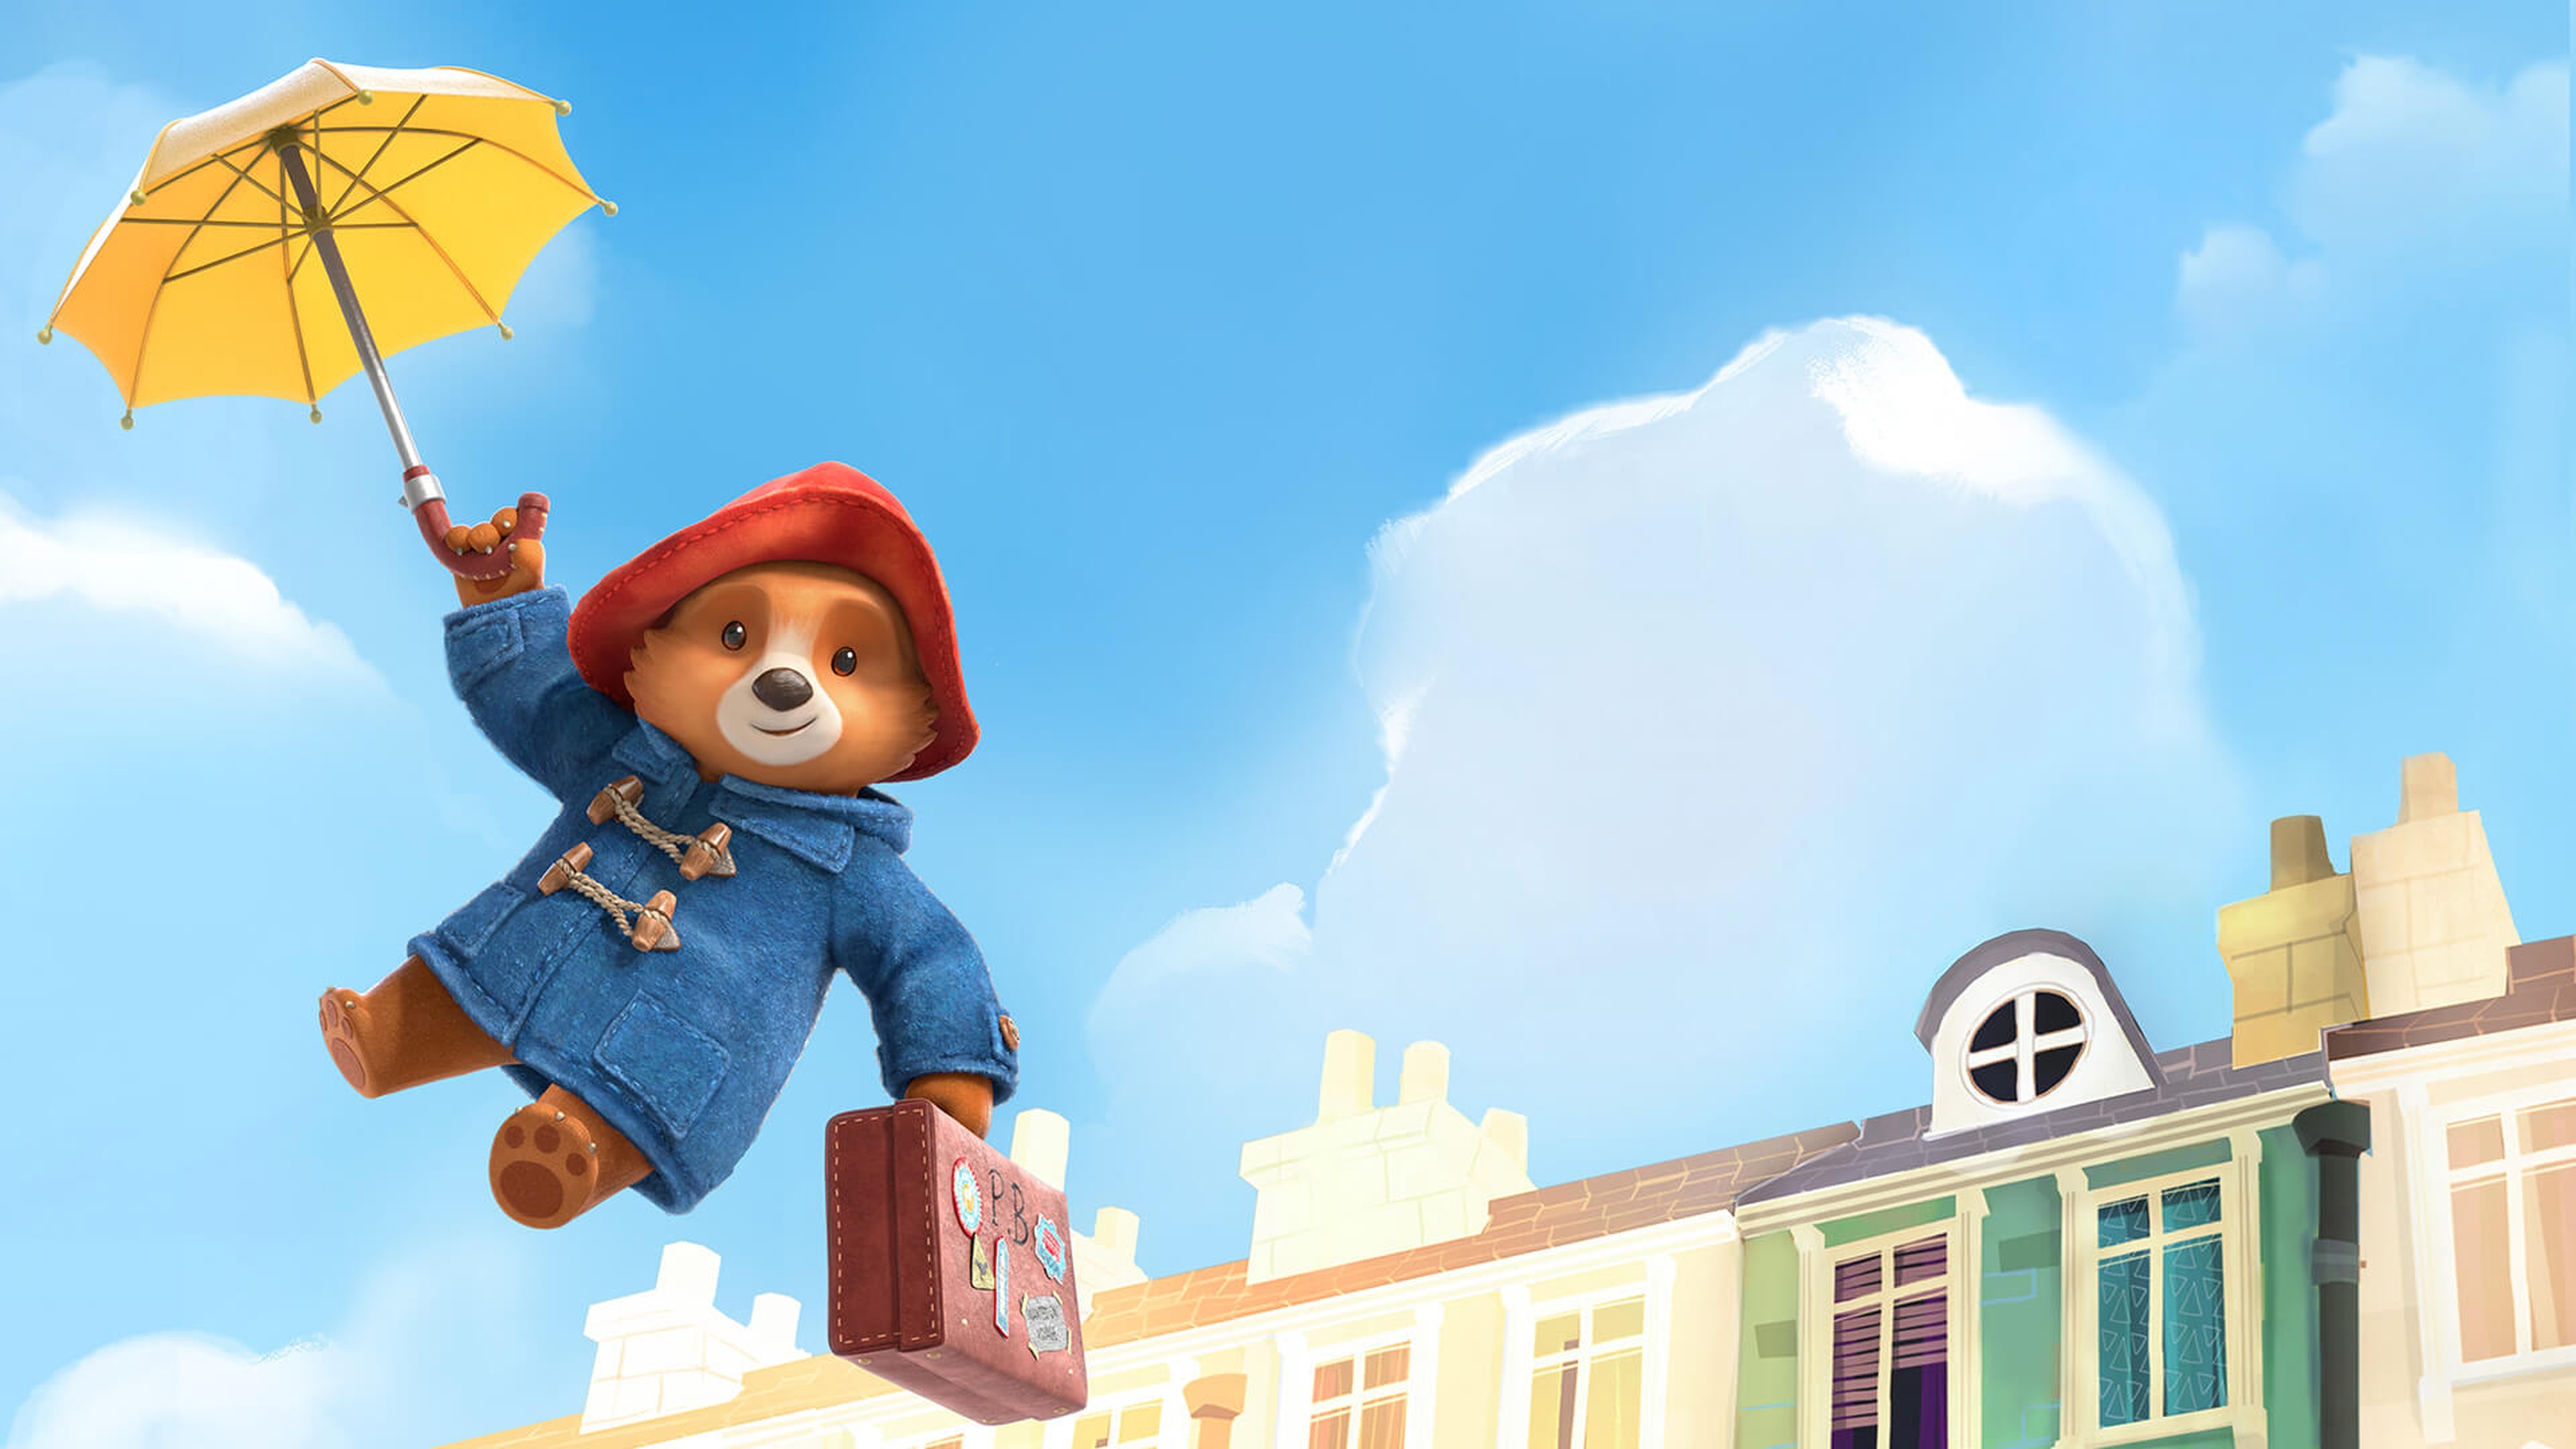 Cartoon Paddington bear floating above buildings